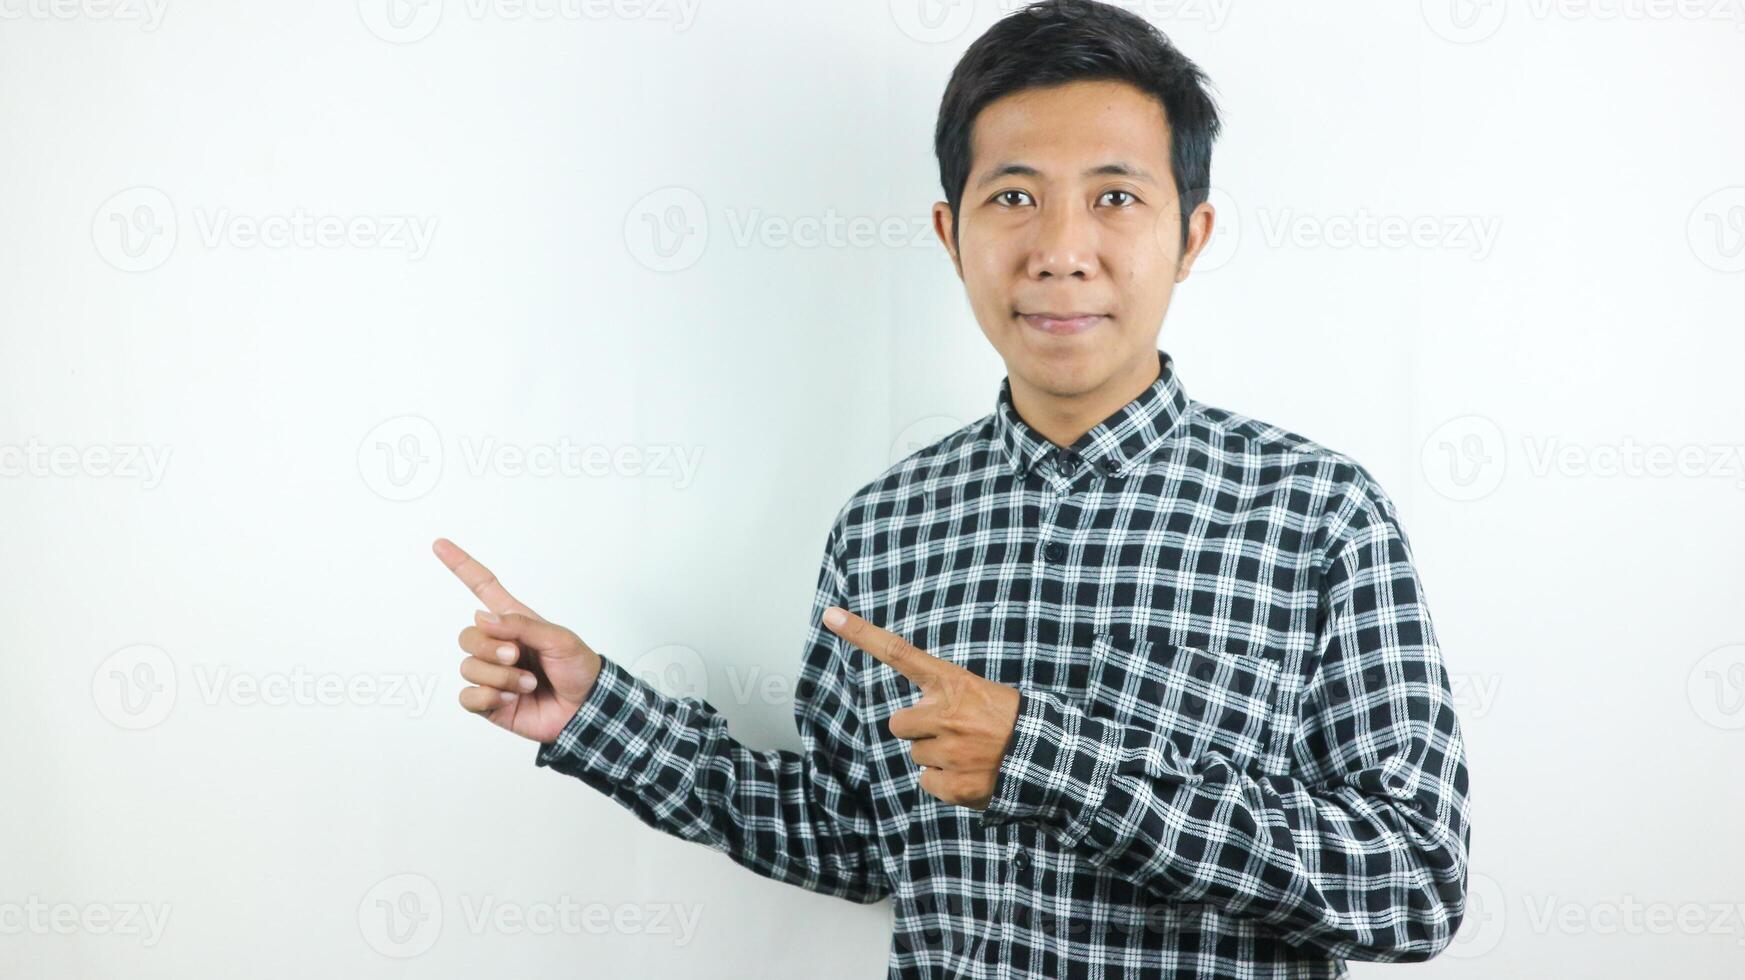 adulto ásia homem vestindo xadrez camisa sorridente enquanto olhando e apontando certo lado. foto